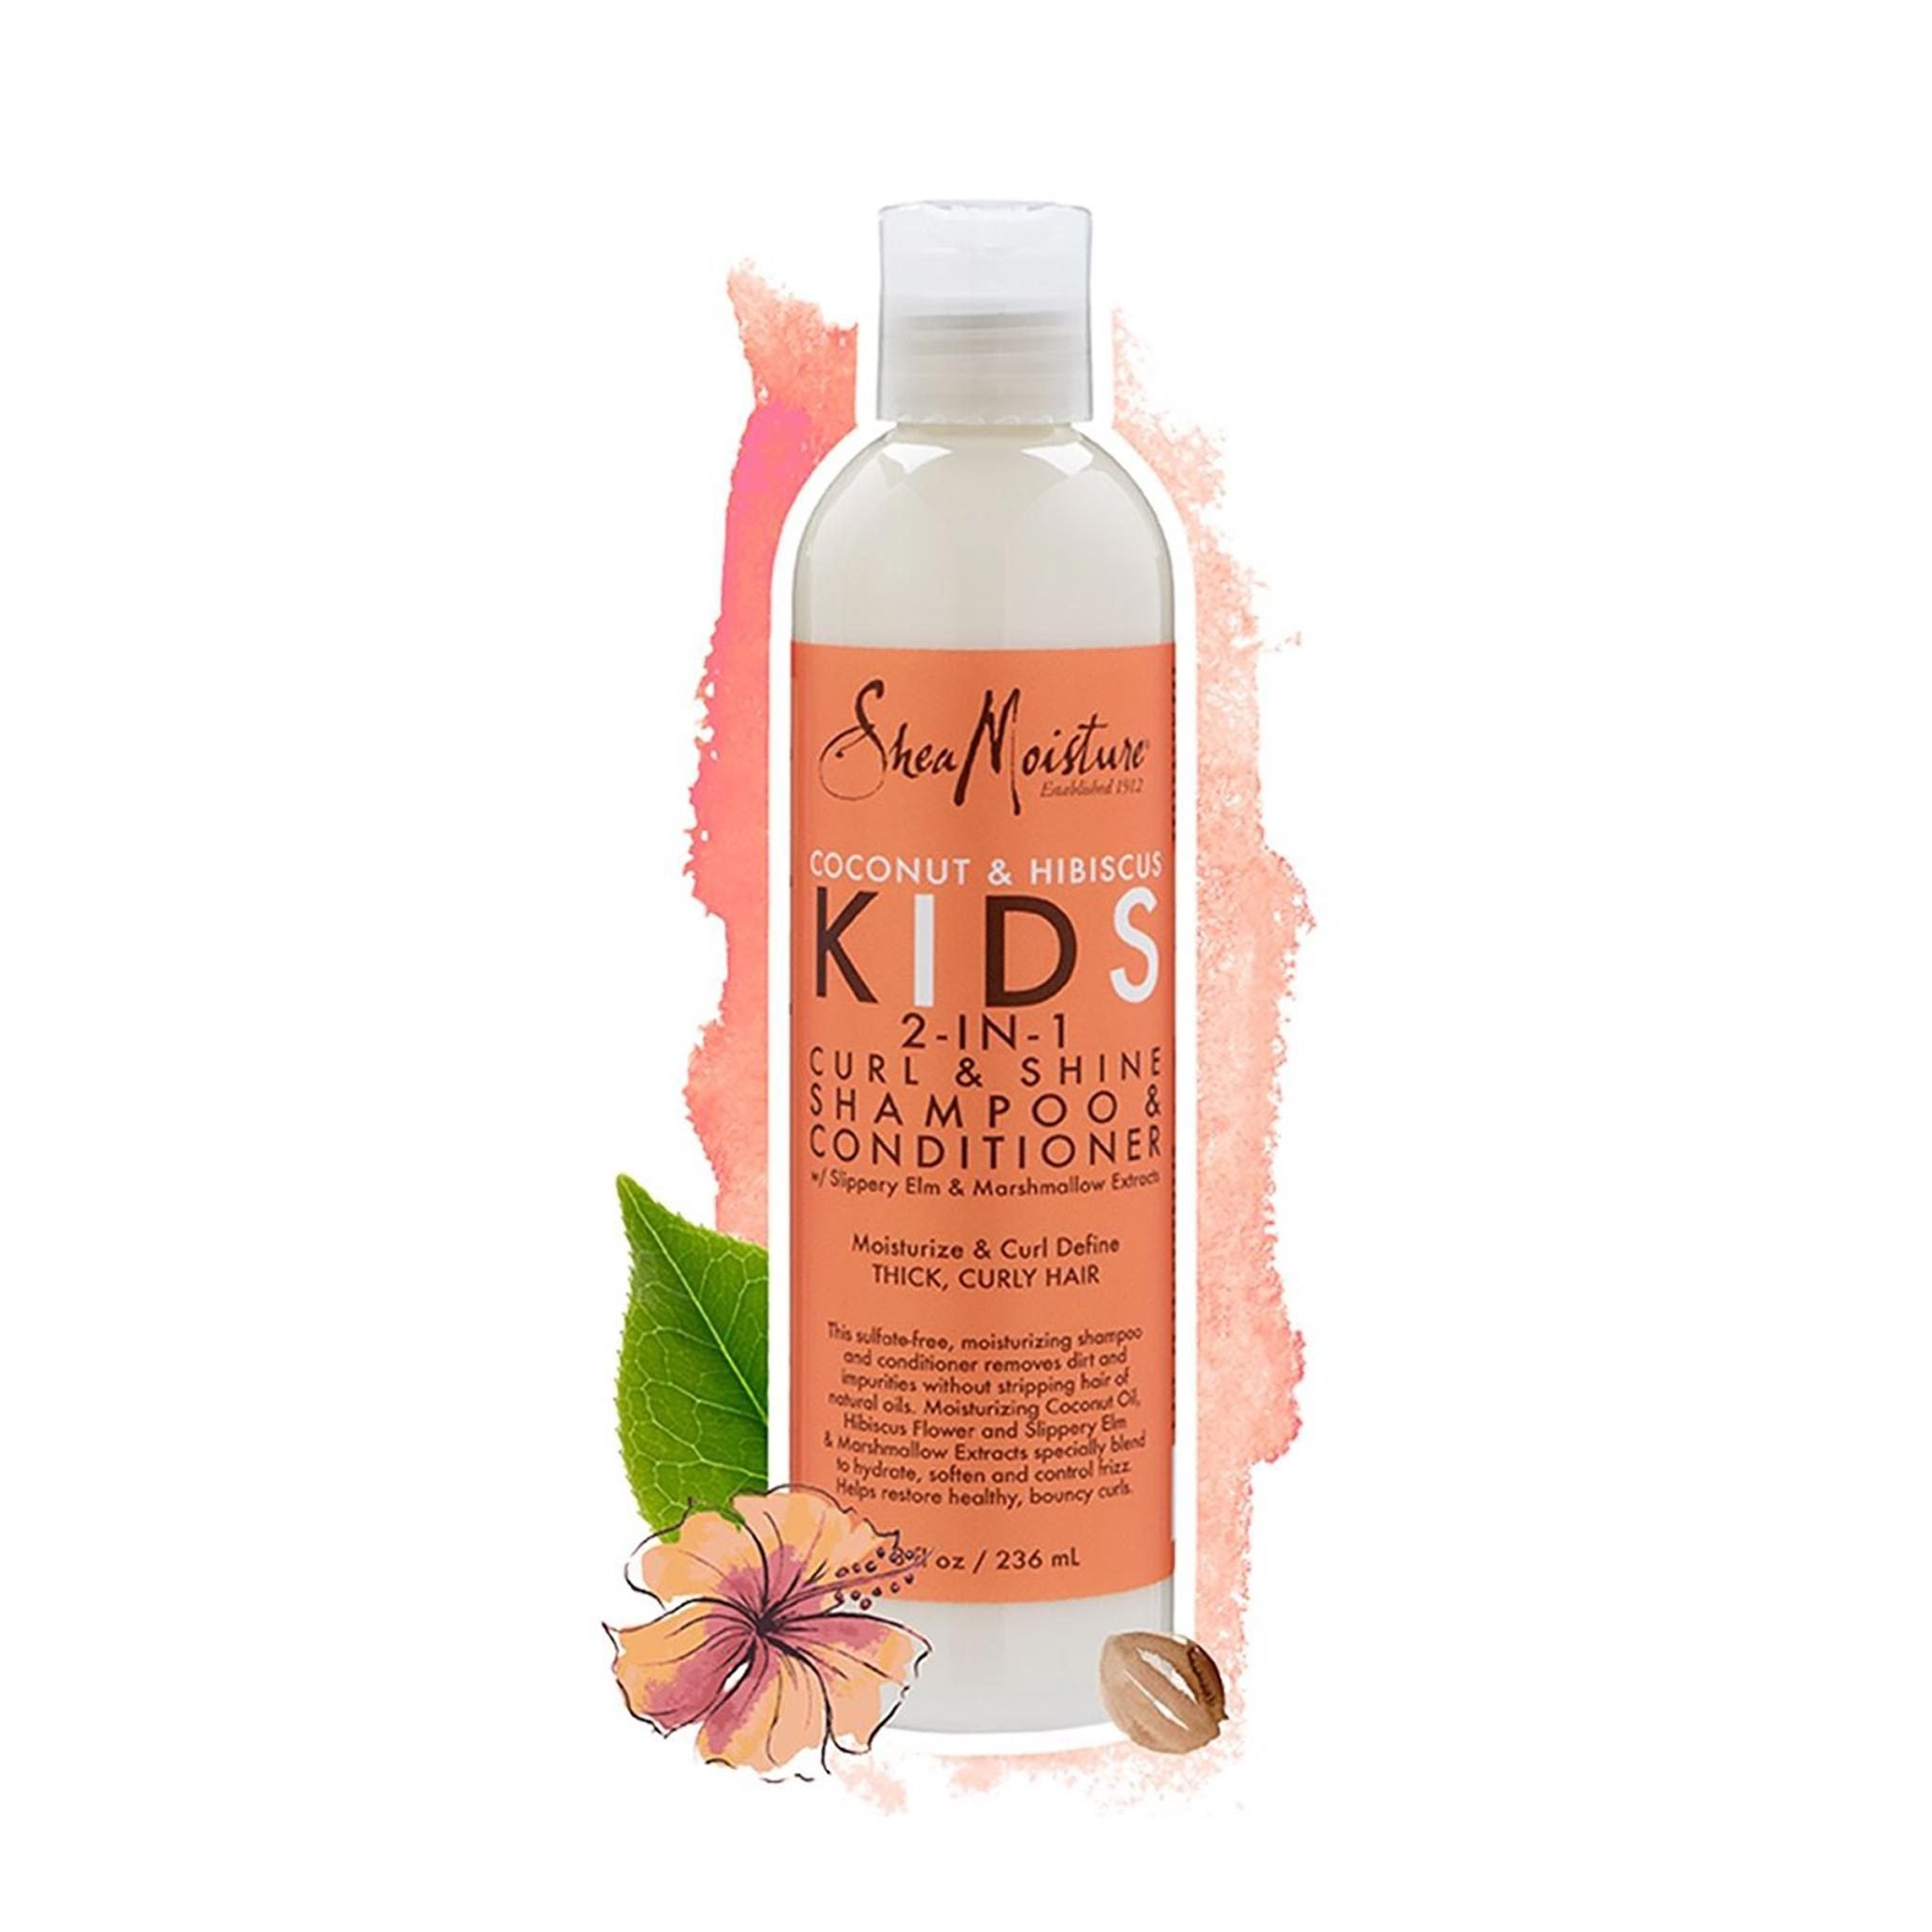 Shea Moisture KIDS| 2In1 Shampoo & Conditioner Coconut & Hibiscus - lockenkopf